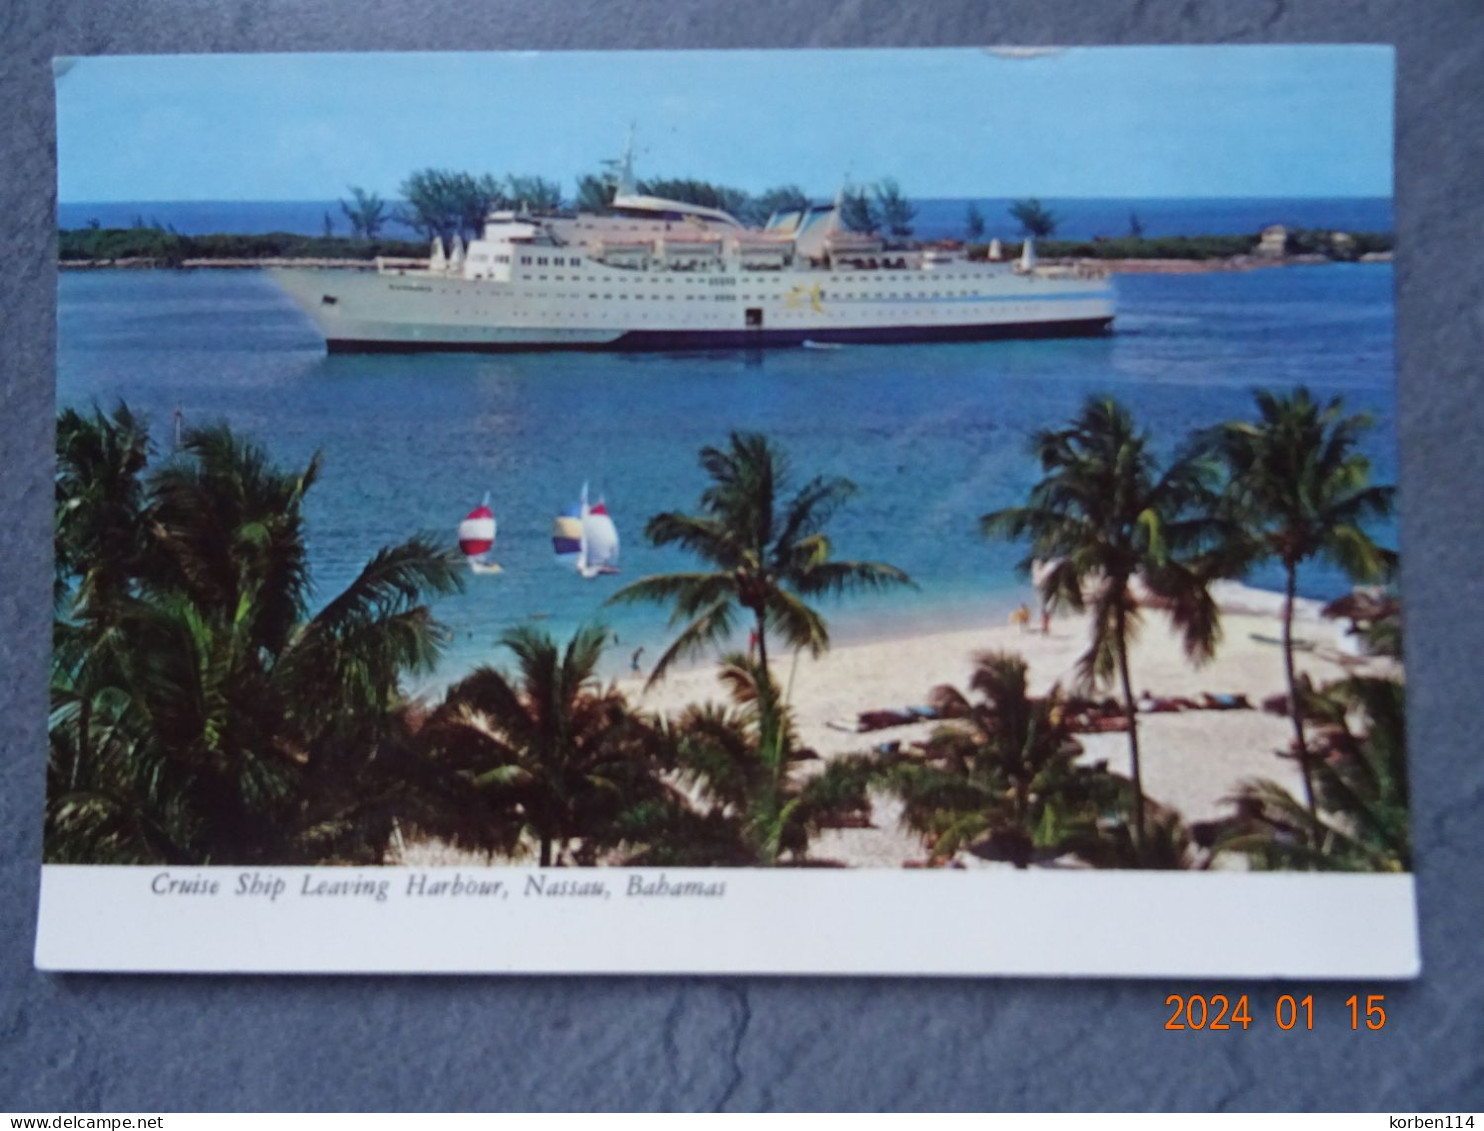 CRUISE SHIP LEAVING HARBOR NASSAU - Bahamas